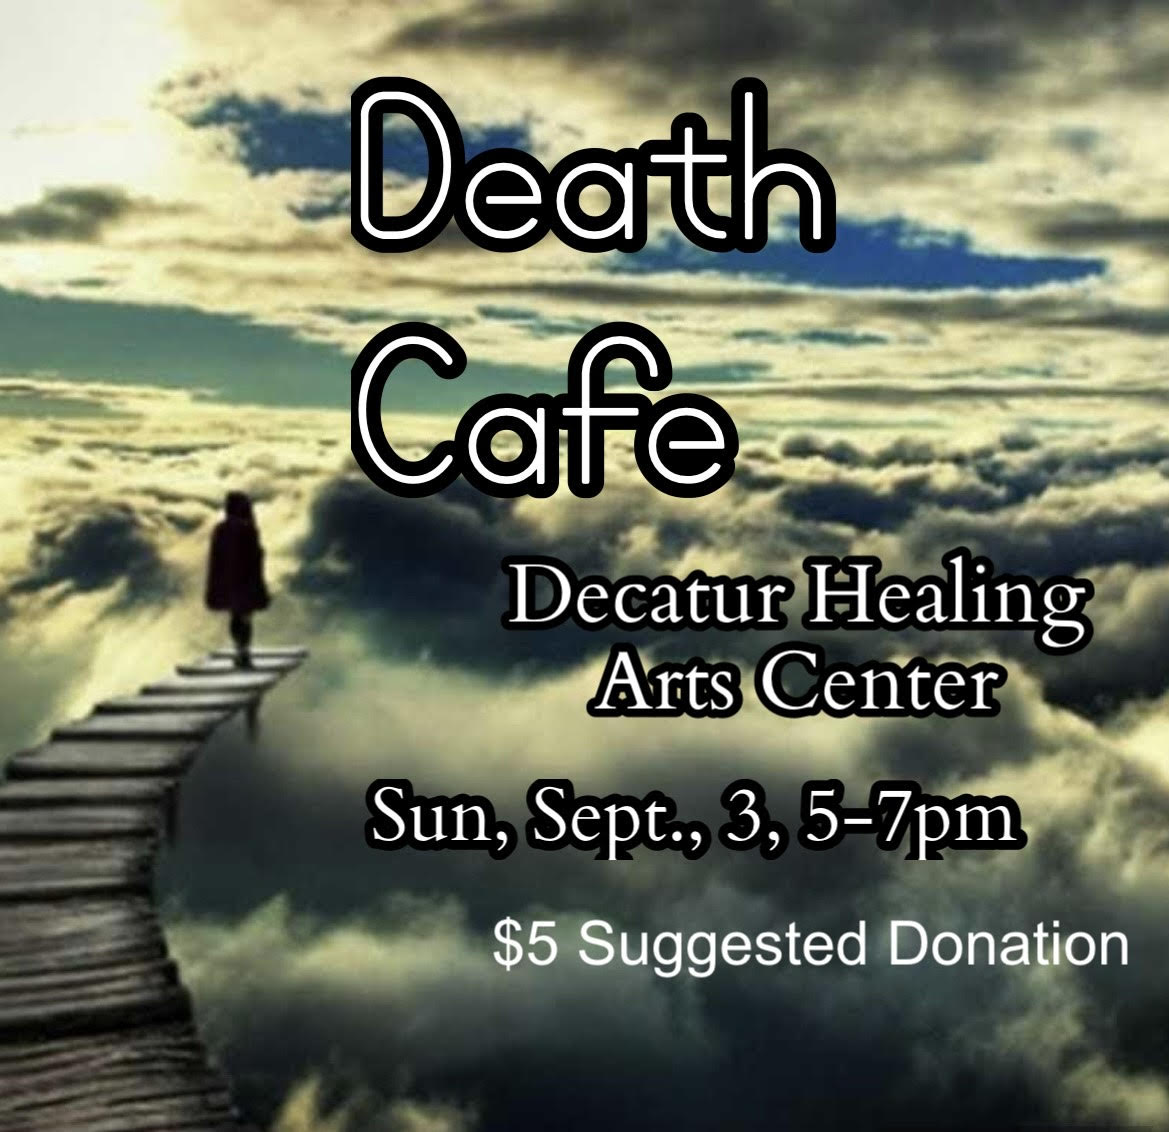 Death Cafe at Decatur Healing Arts Center